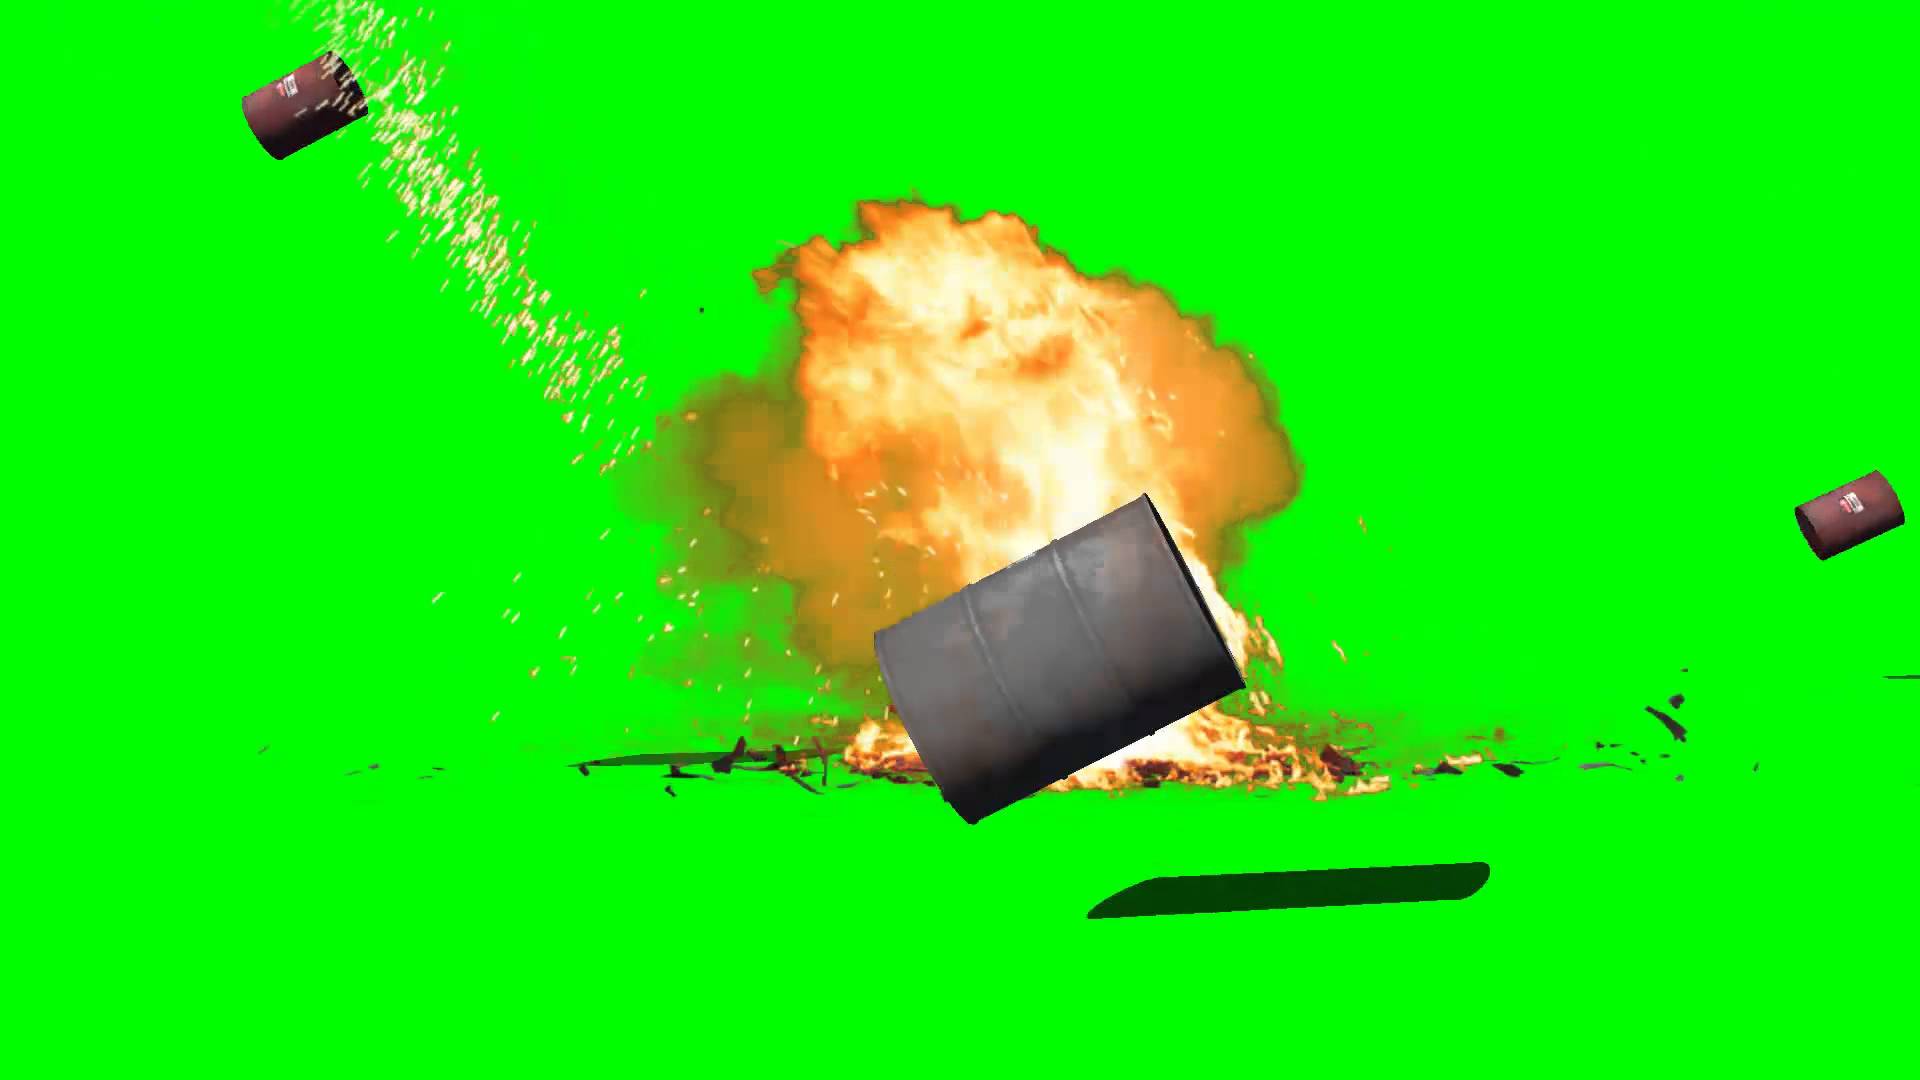 Oil Barrels Explosion - Green Screen - YouTube